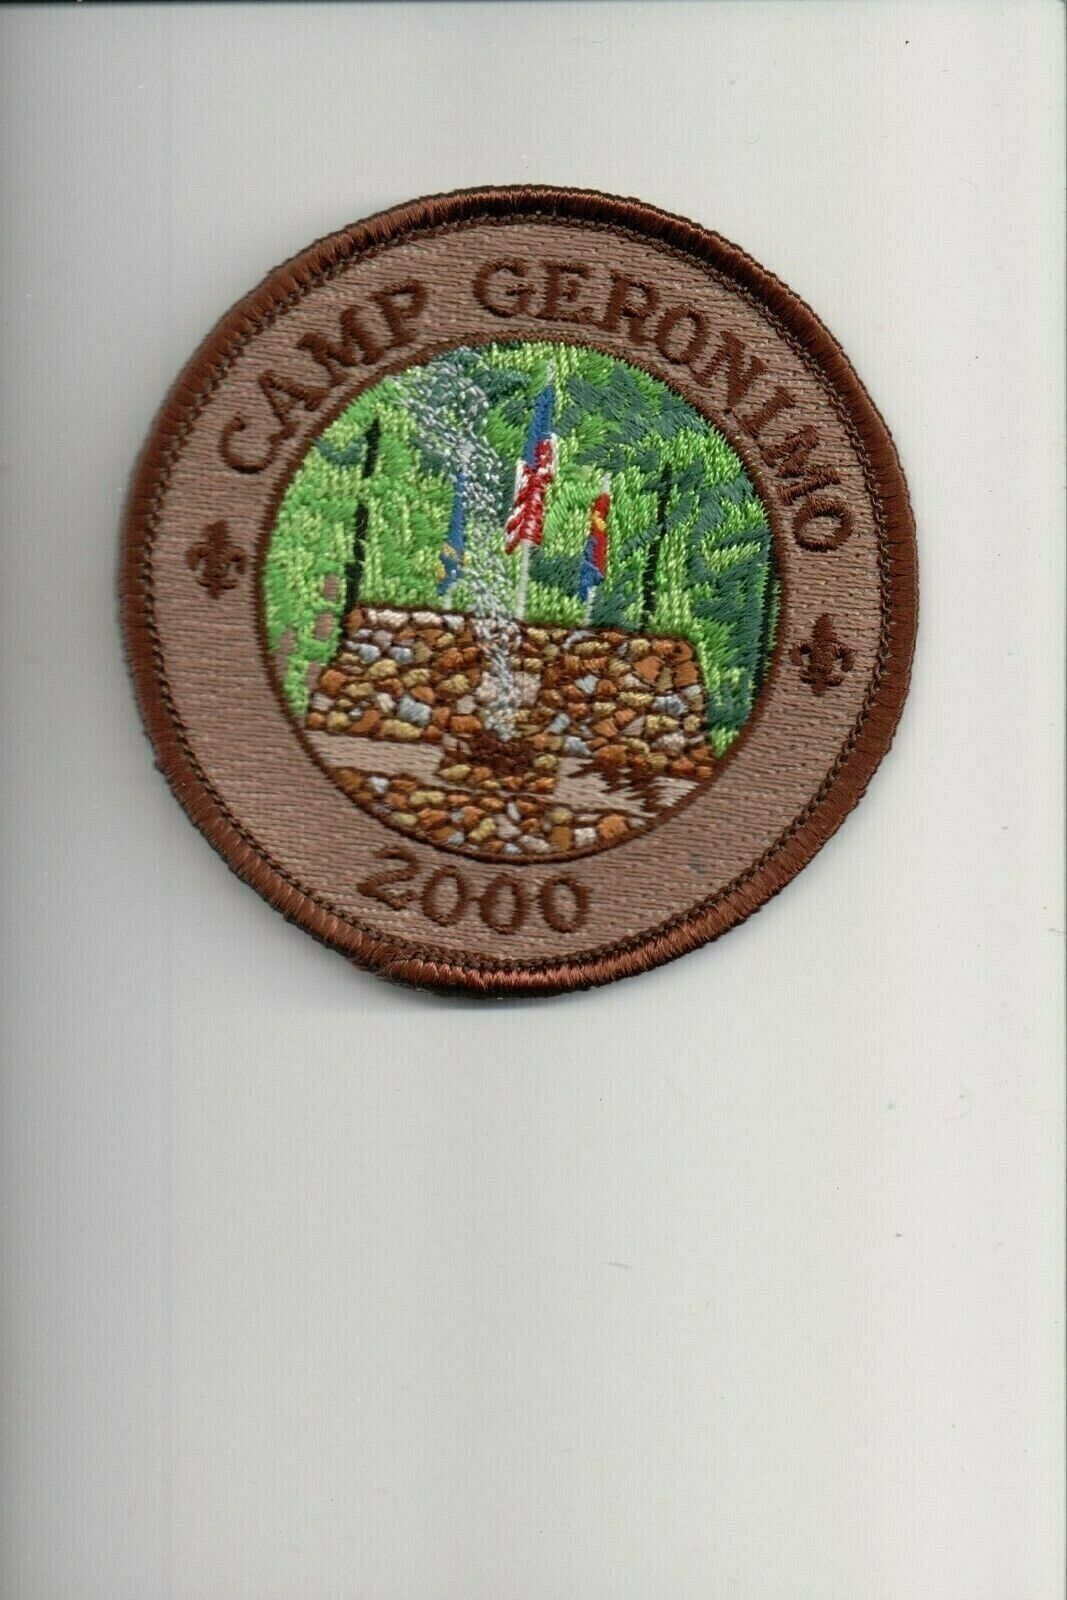 2000 Camp Geronimo patch